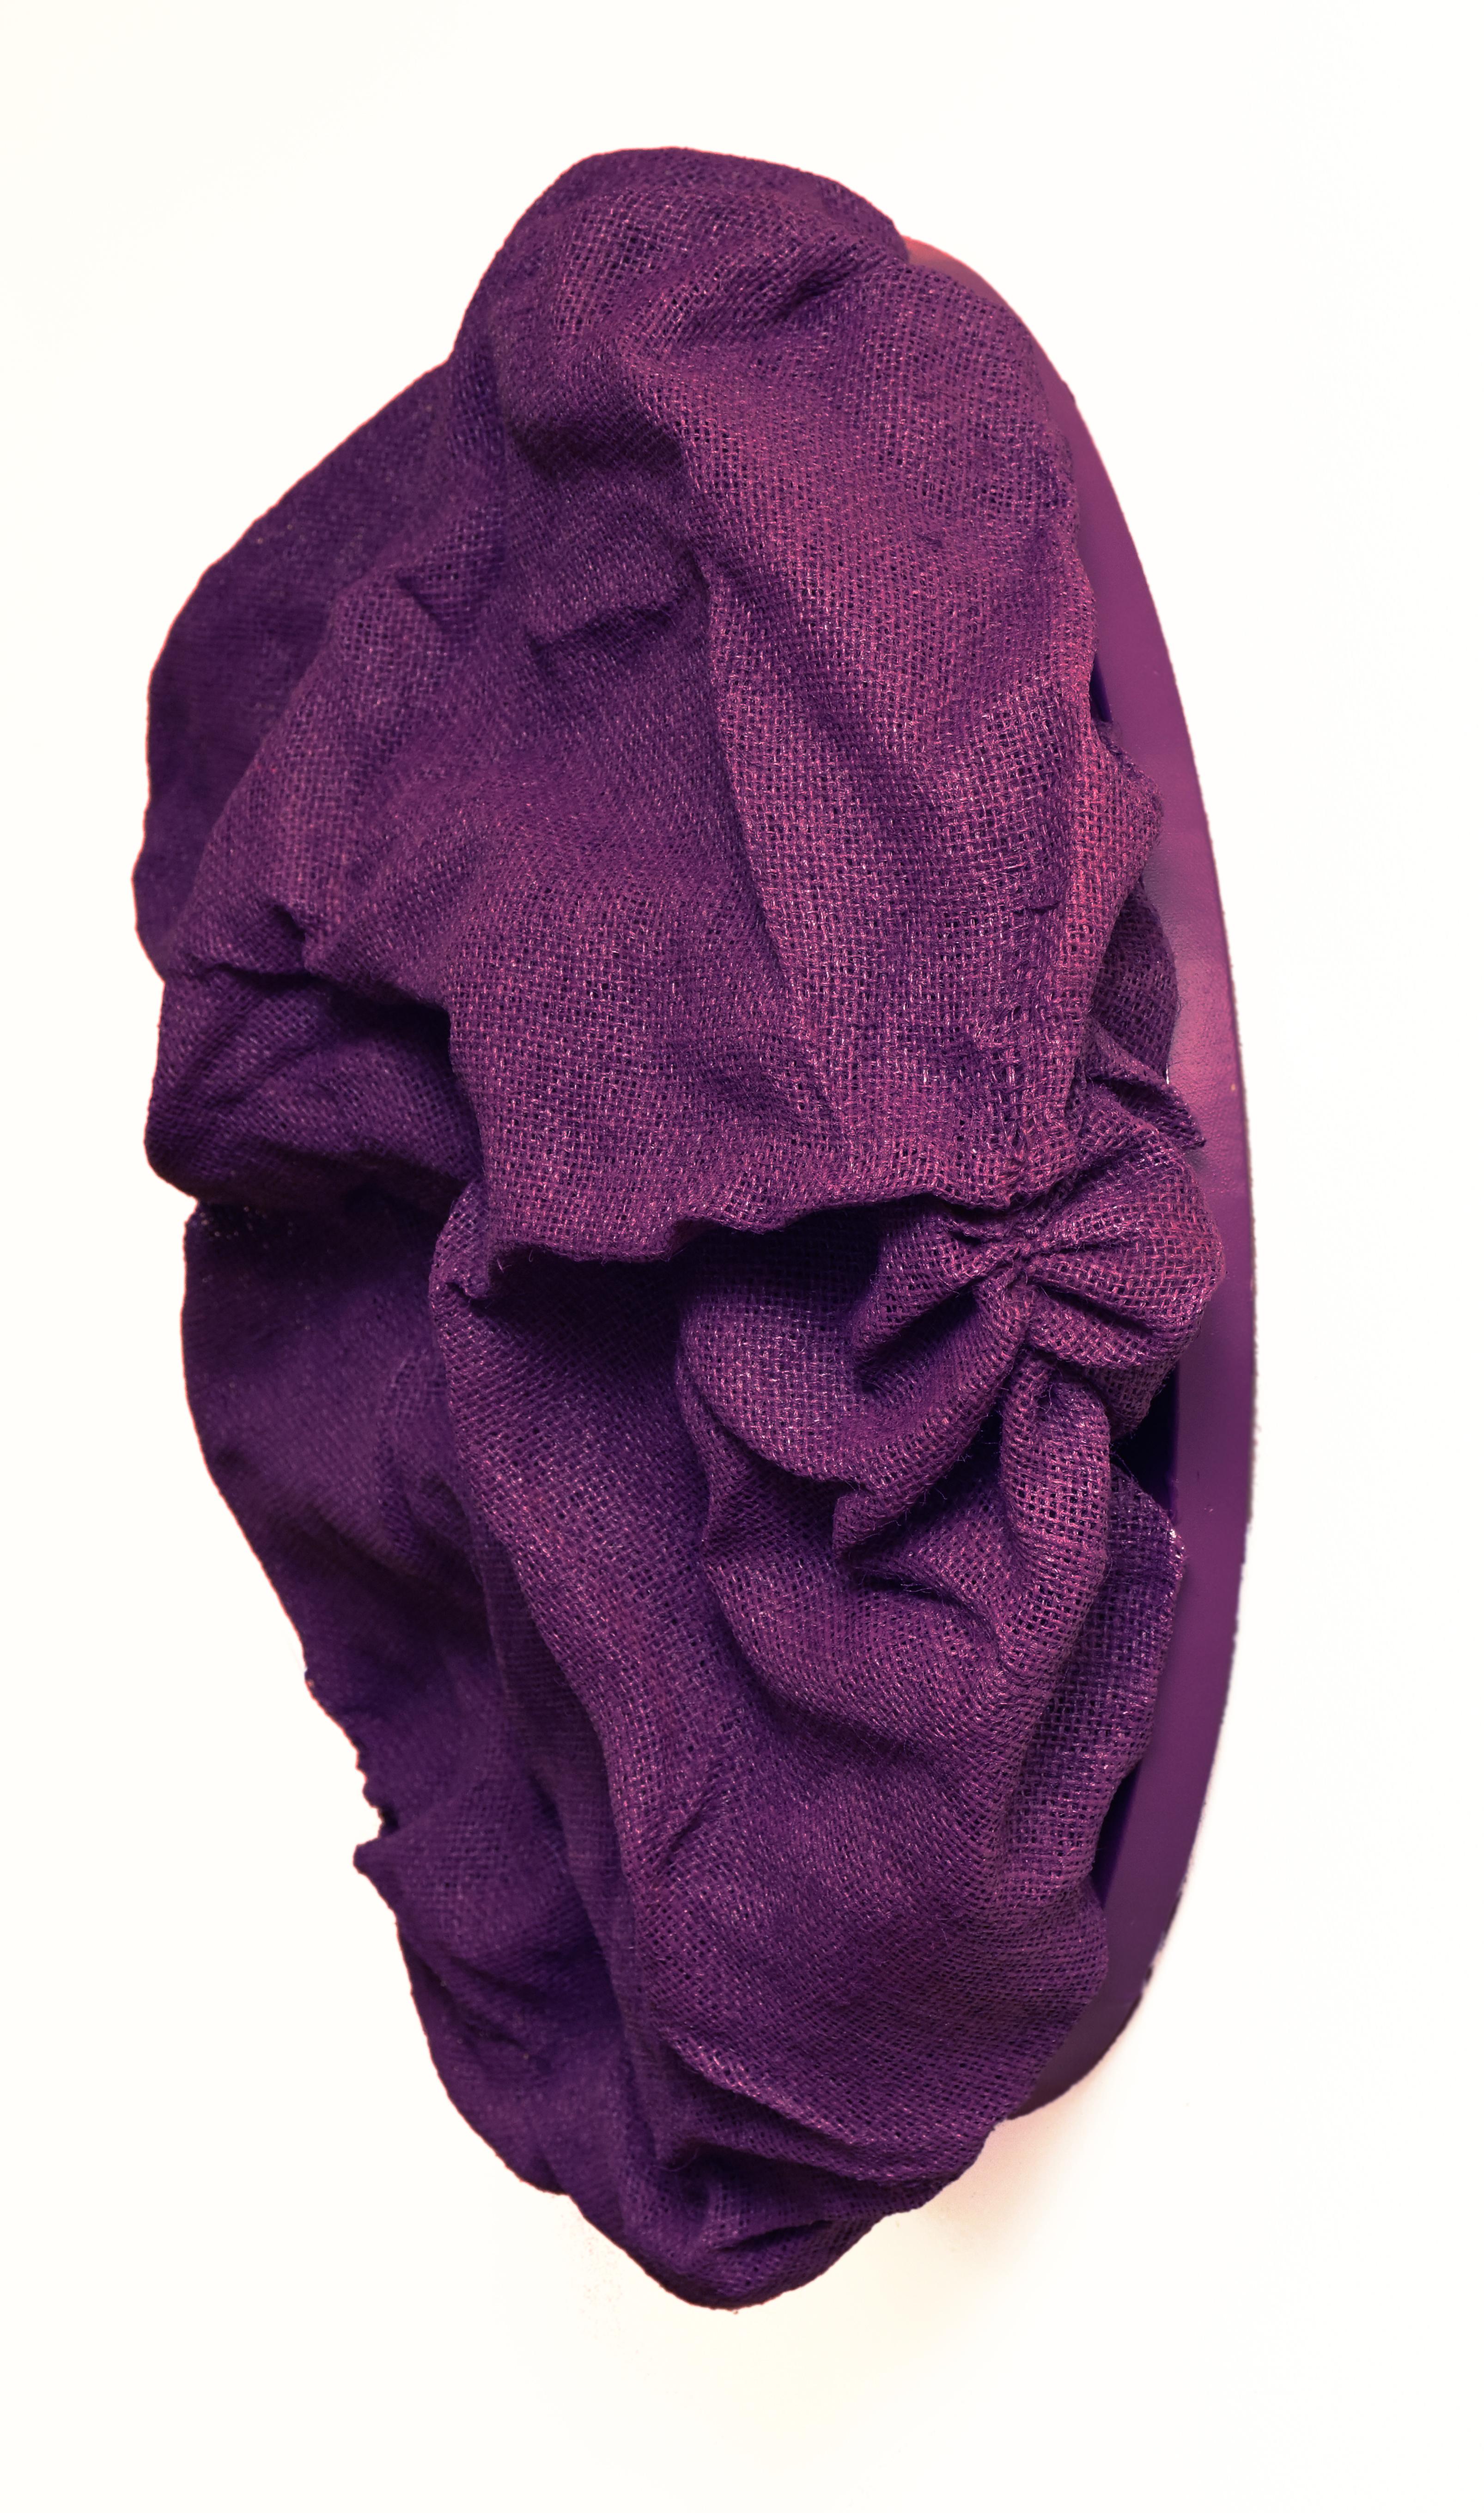 Plum Folds (fabric, contemporary design, monochrome, minimalist, textile design) - Purple Abstract Sculpture by Chloe Hedden